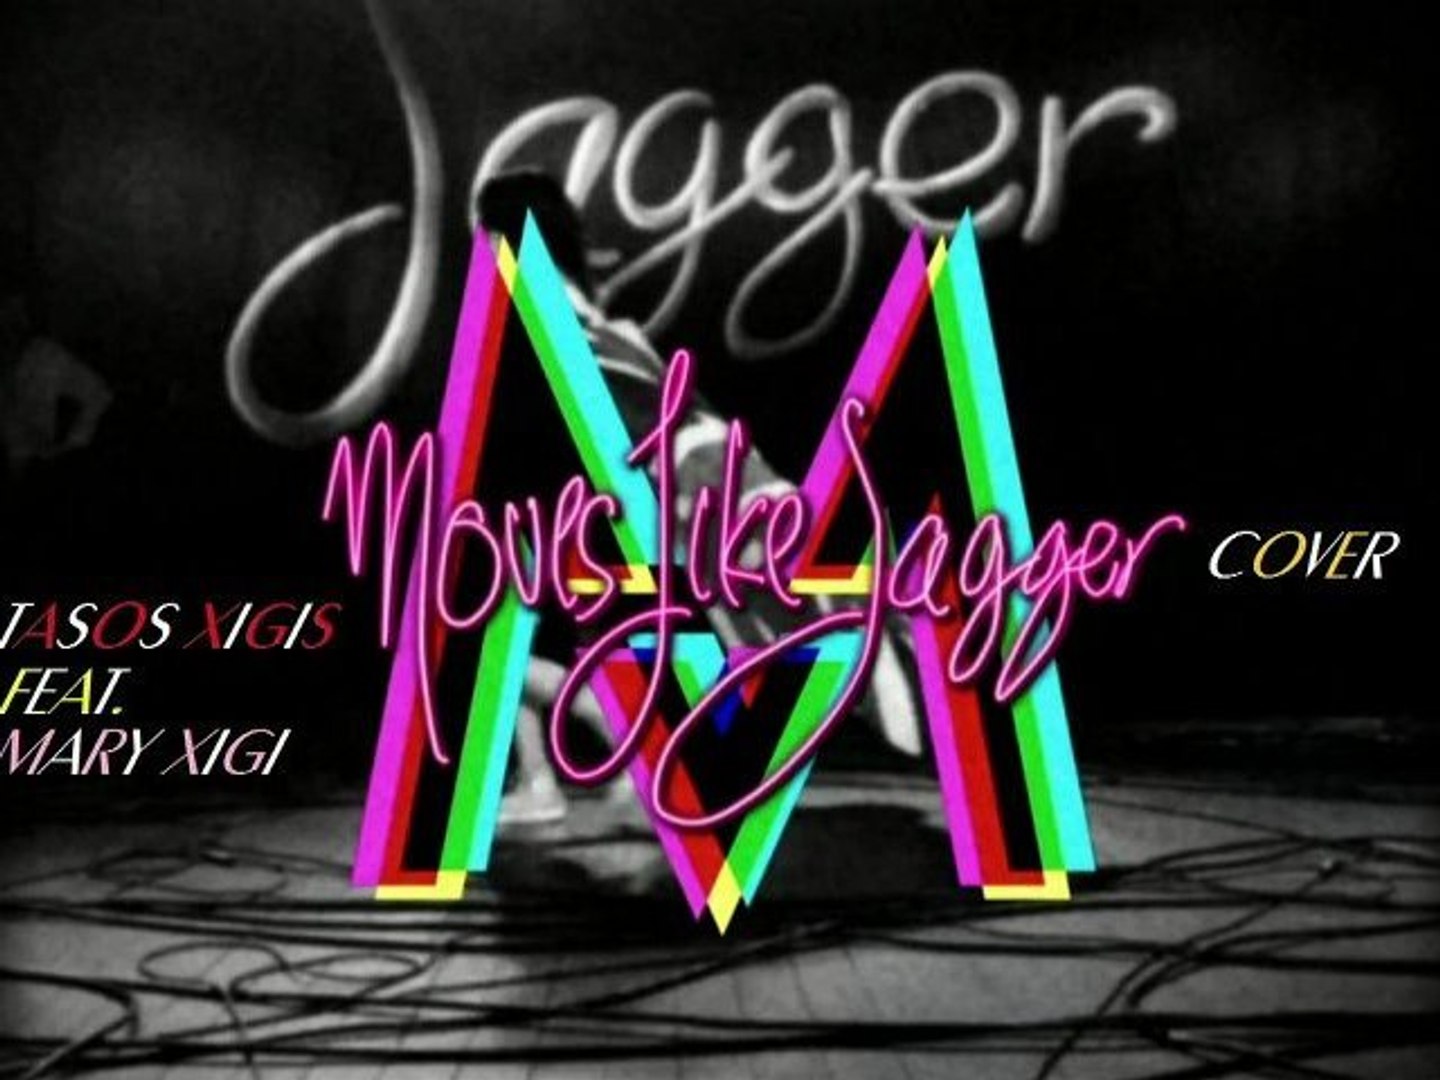 Moves like Jagger - Maroon 5 Feat. Christina Aguilera - Tasos Xigis Feat.  Mary Xigi Cover - video Dailymotion